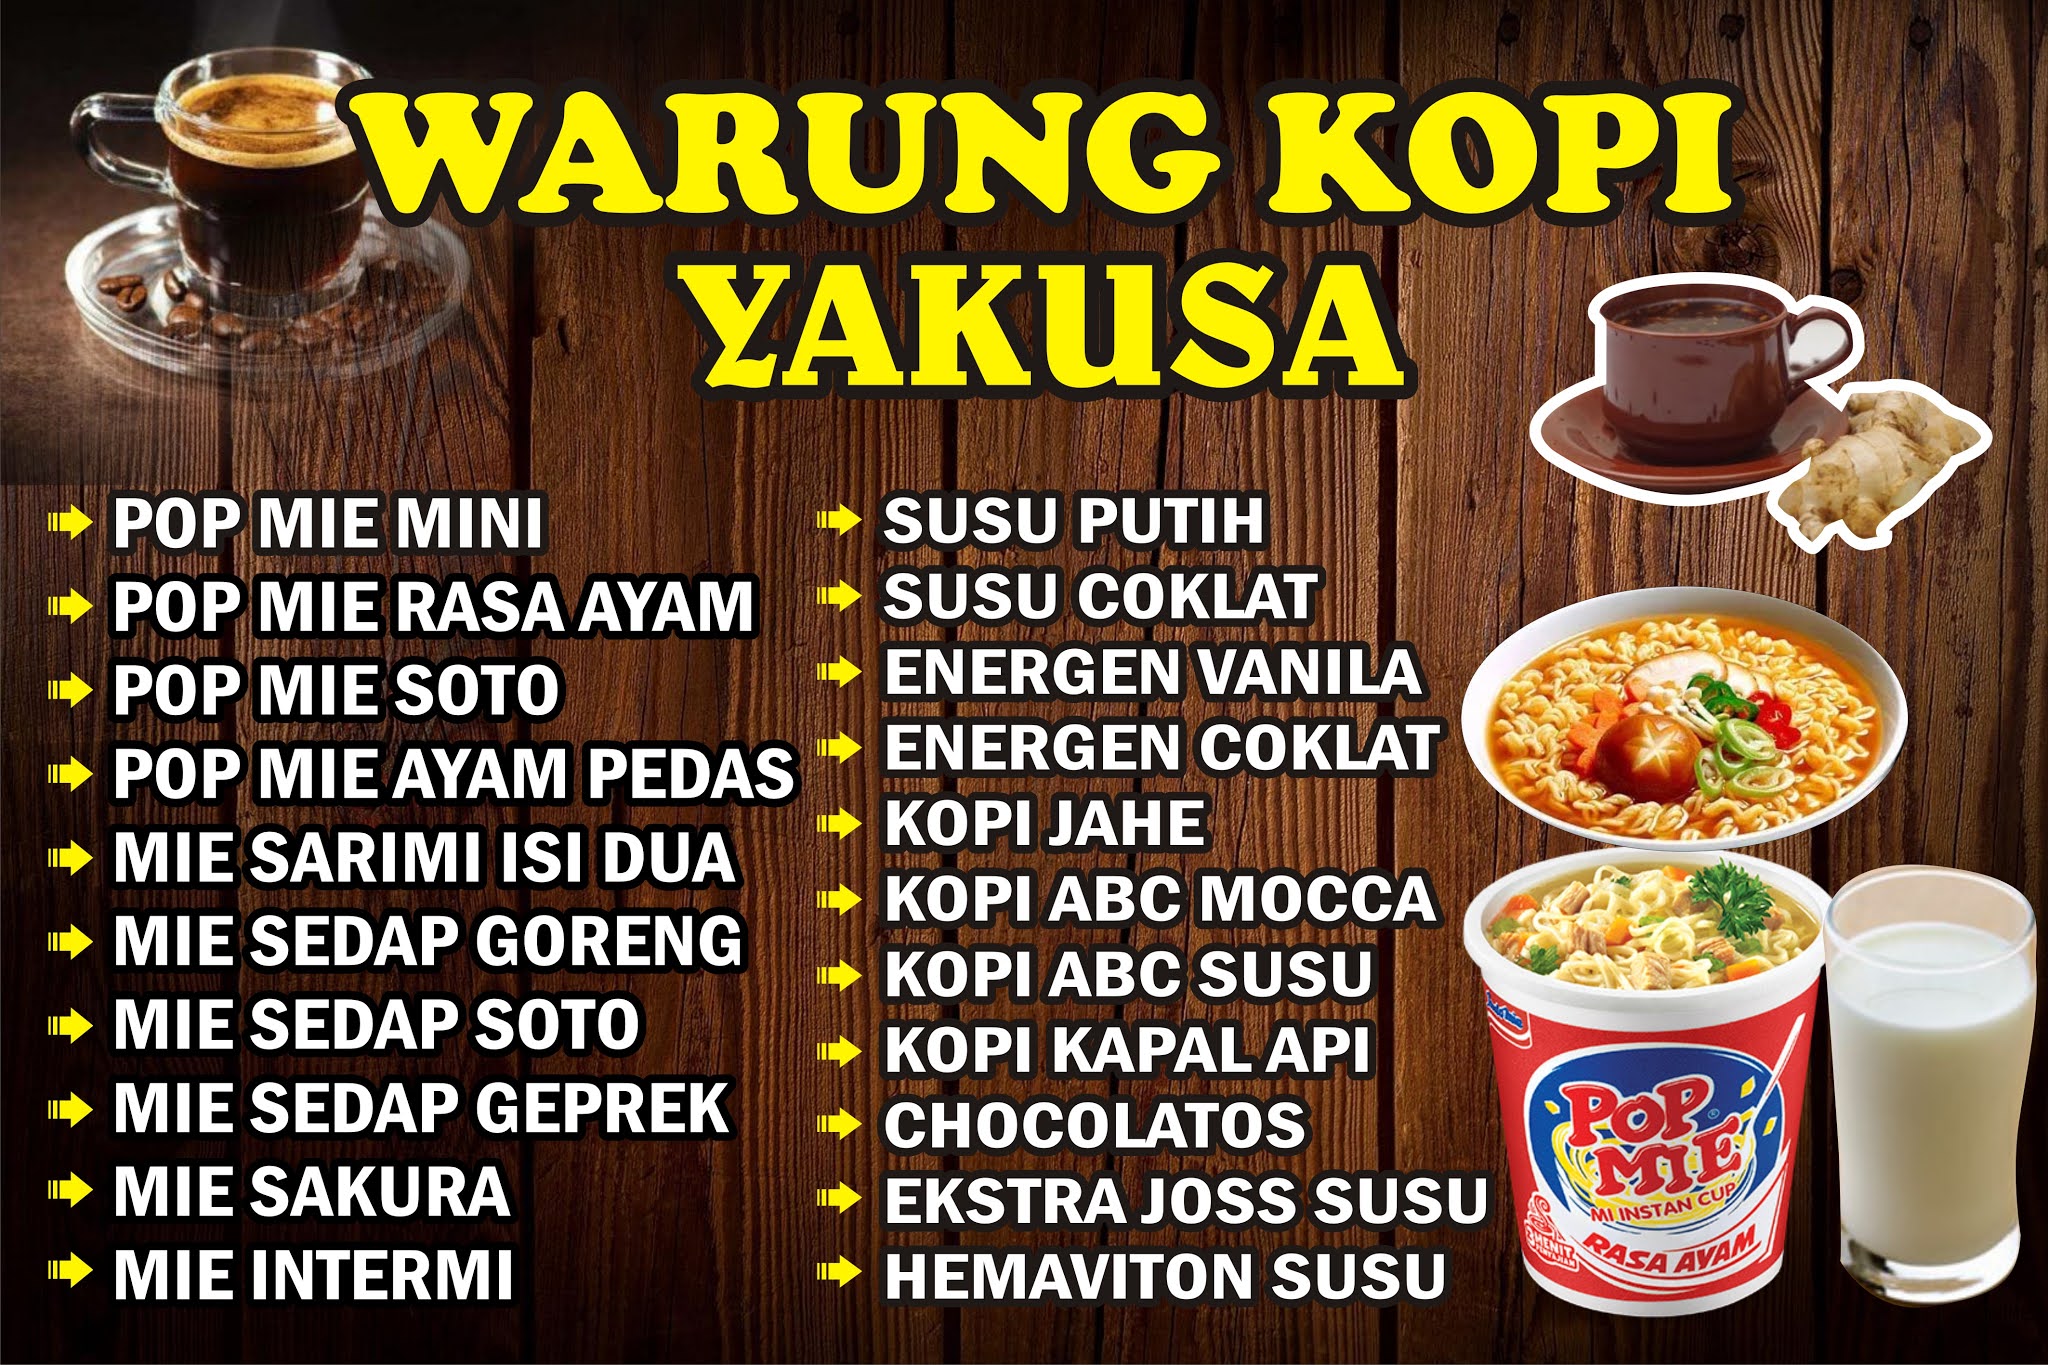 Warung Kopi Prapatan laguna - Coffee Shop Recommend!